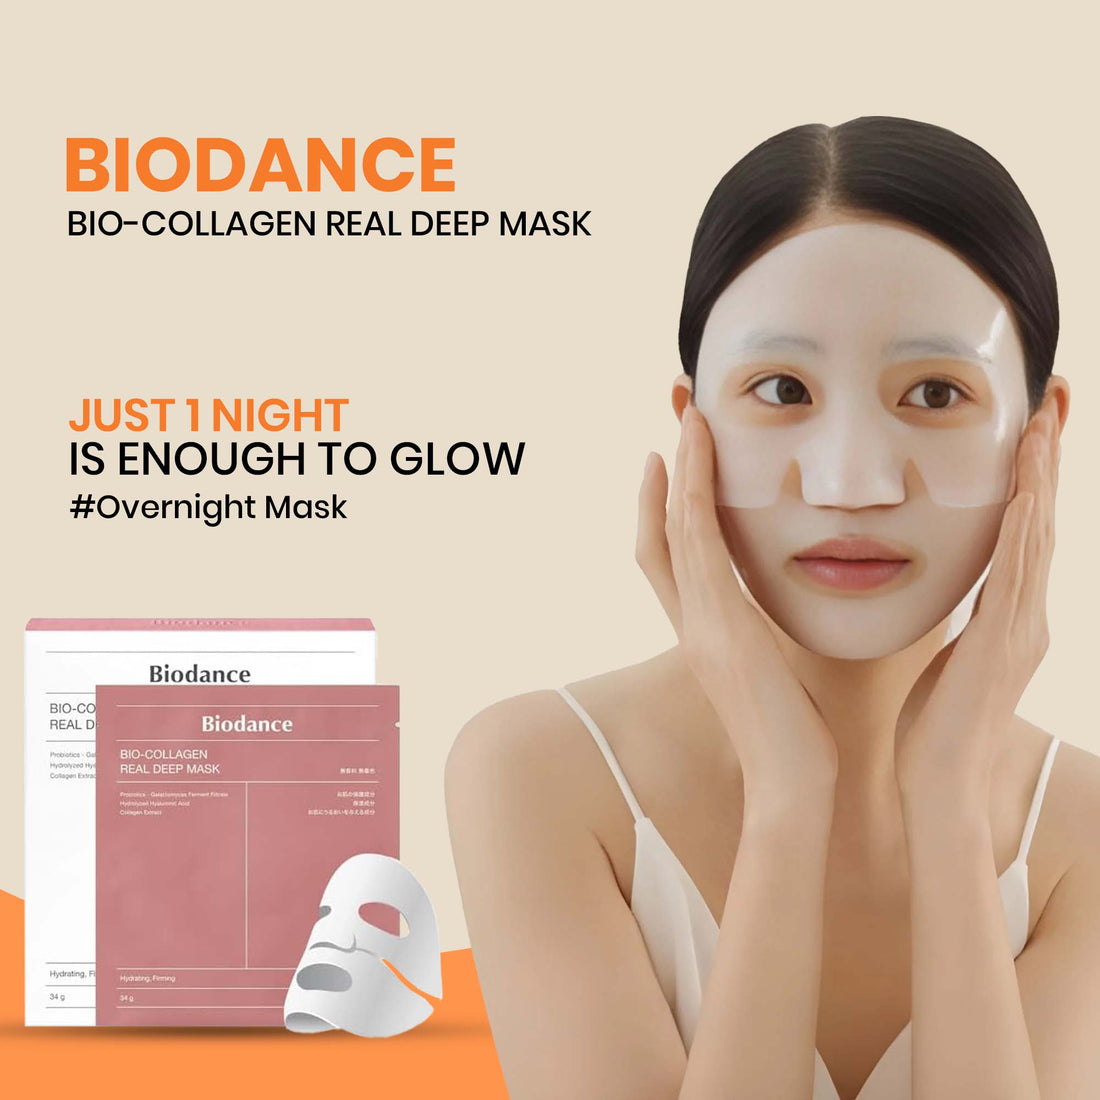 How-to-Properly-Use-Biodance-Collagen-Masks Enrapturecosmetics